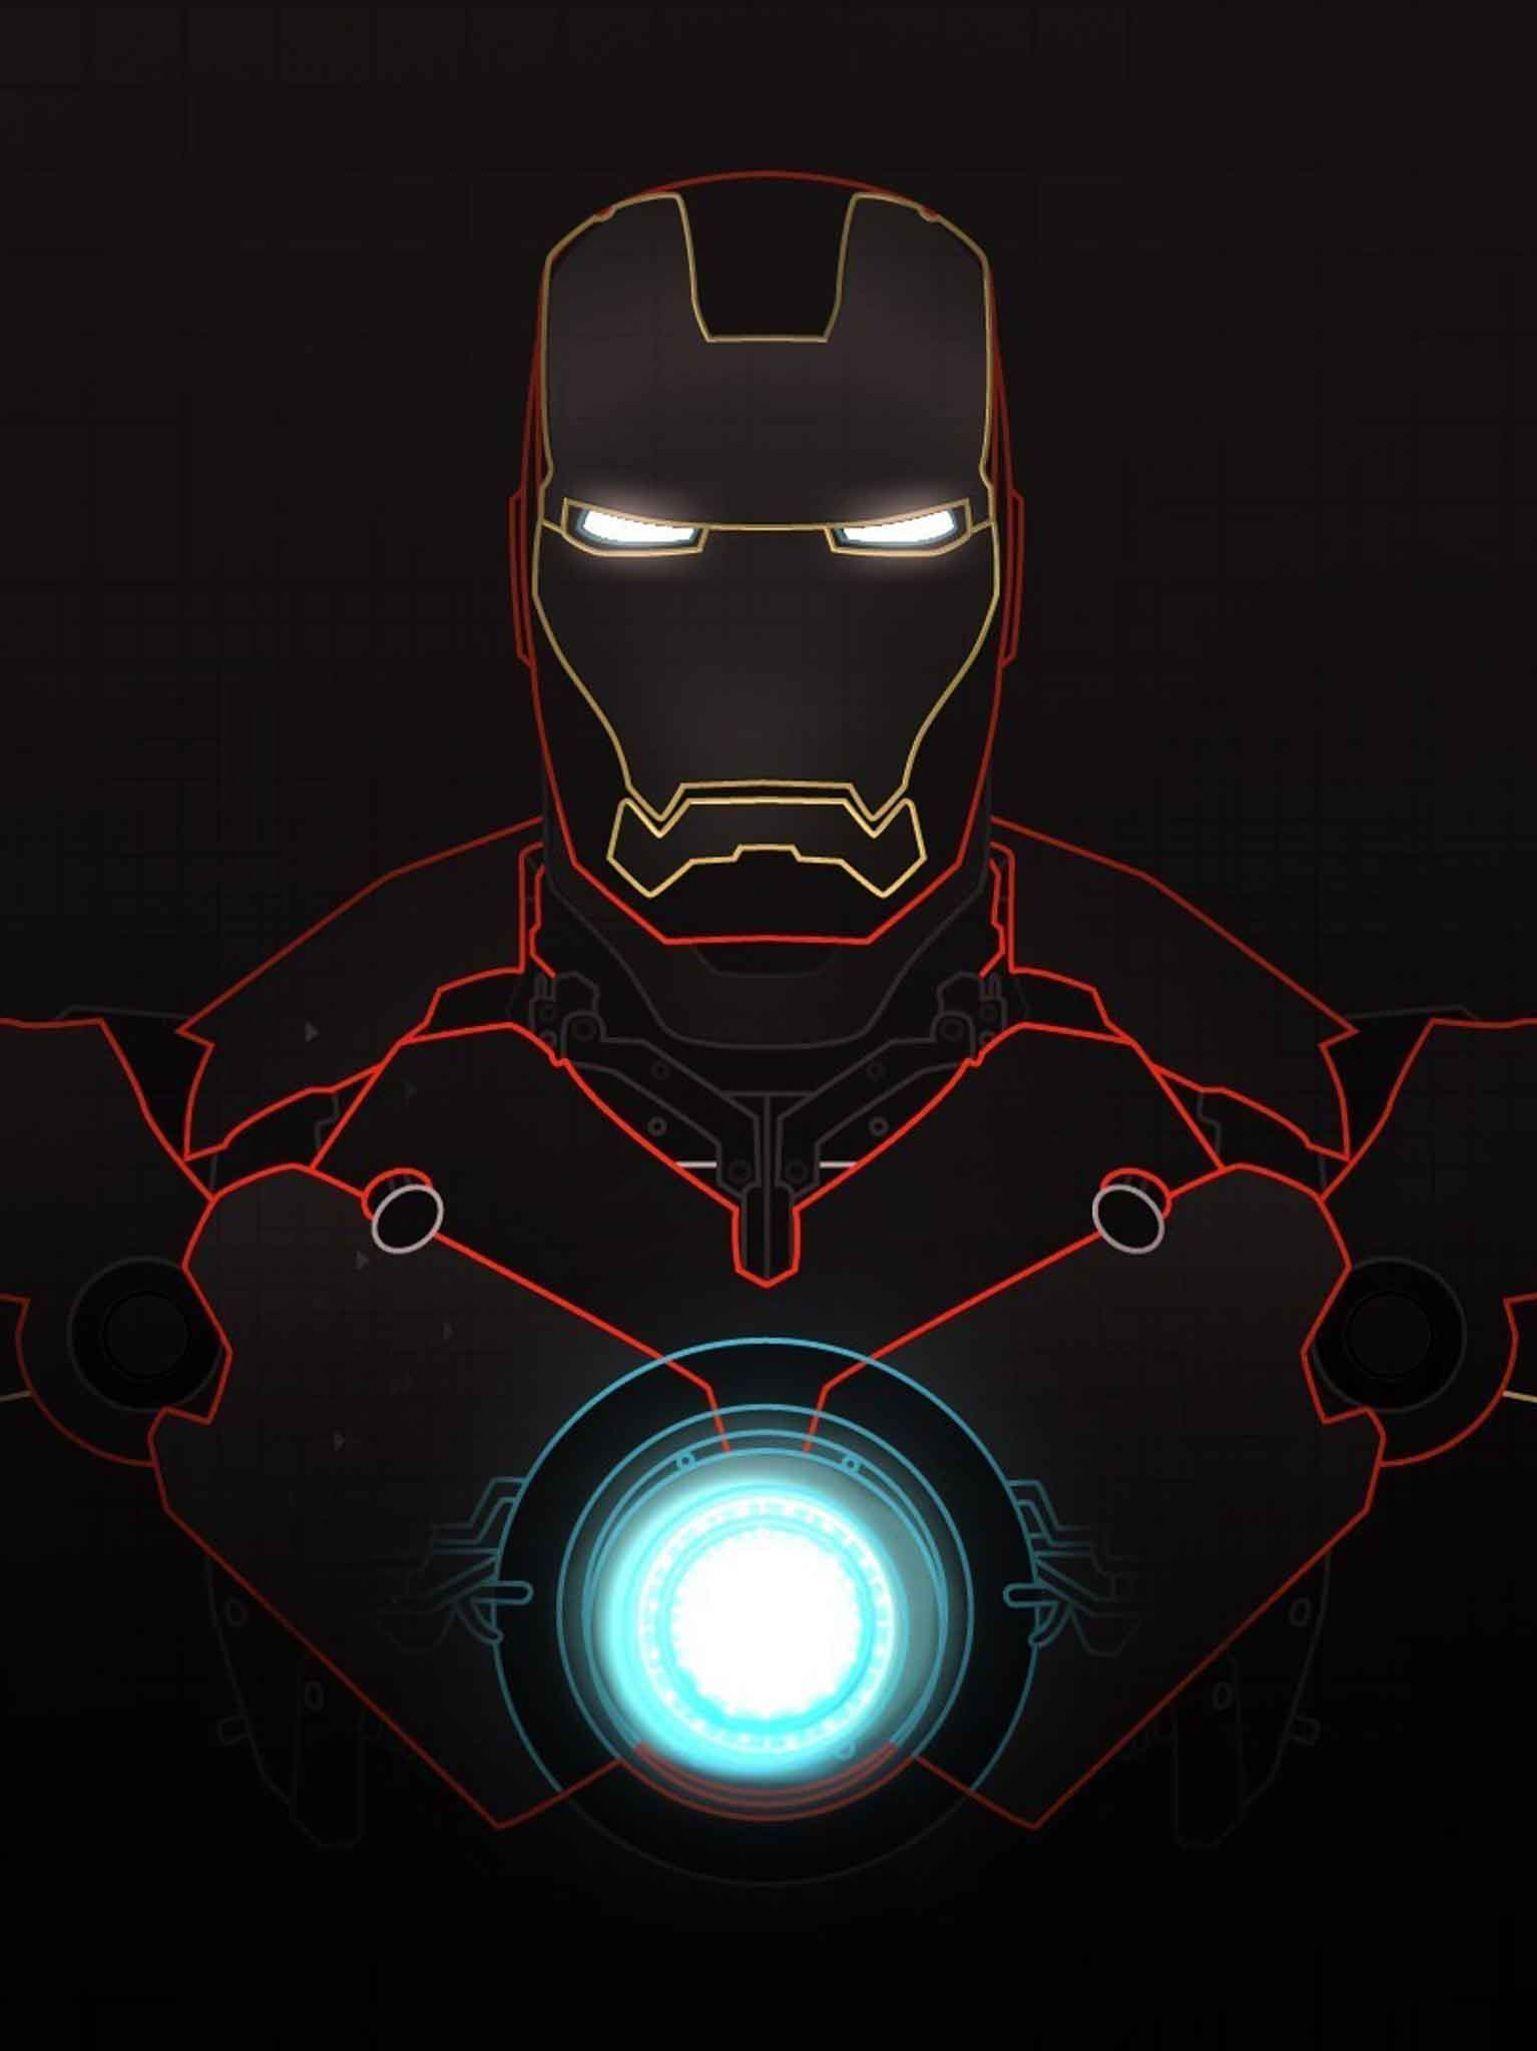 Avengers Iron Man iPad Wallpaper Free Avengers Iron Man iPad Background